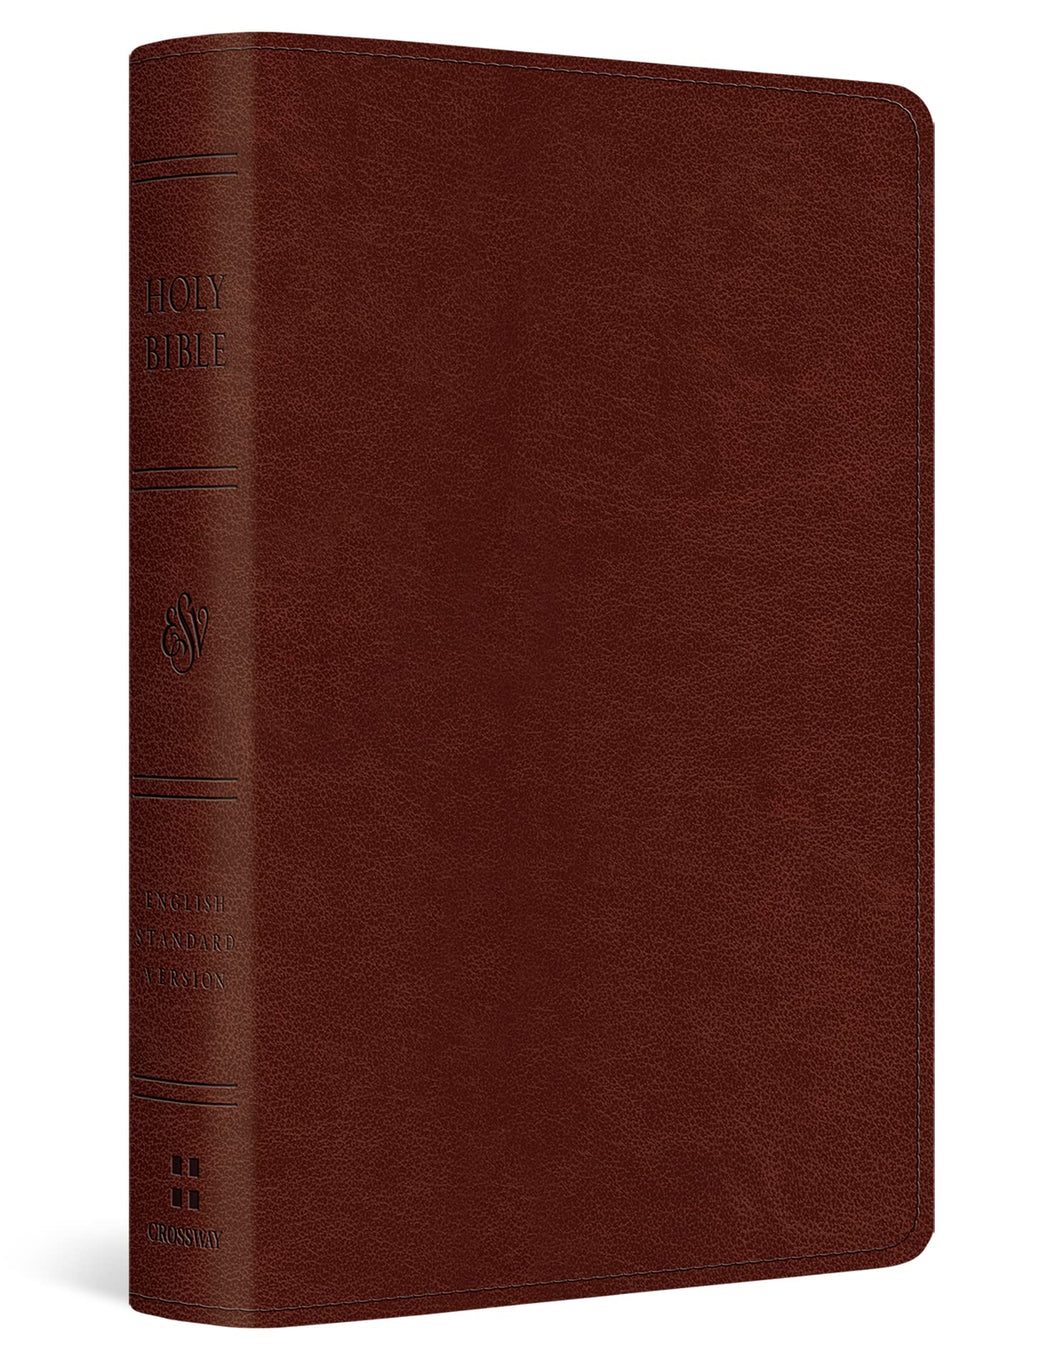 ESV Pocket Bible: Esvbible Trutone, Chestnut Imitation Leather – Import